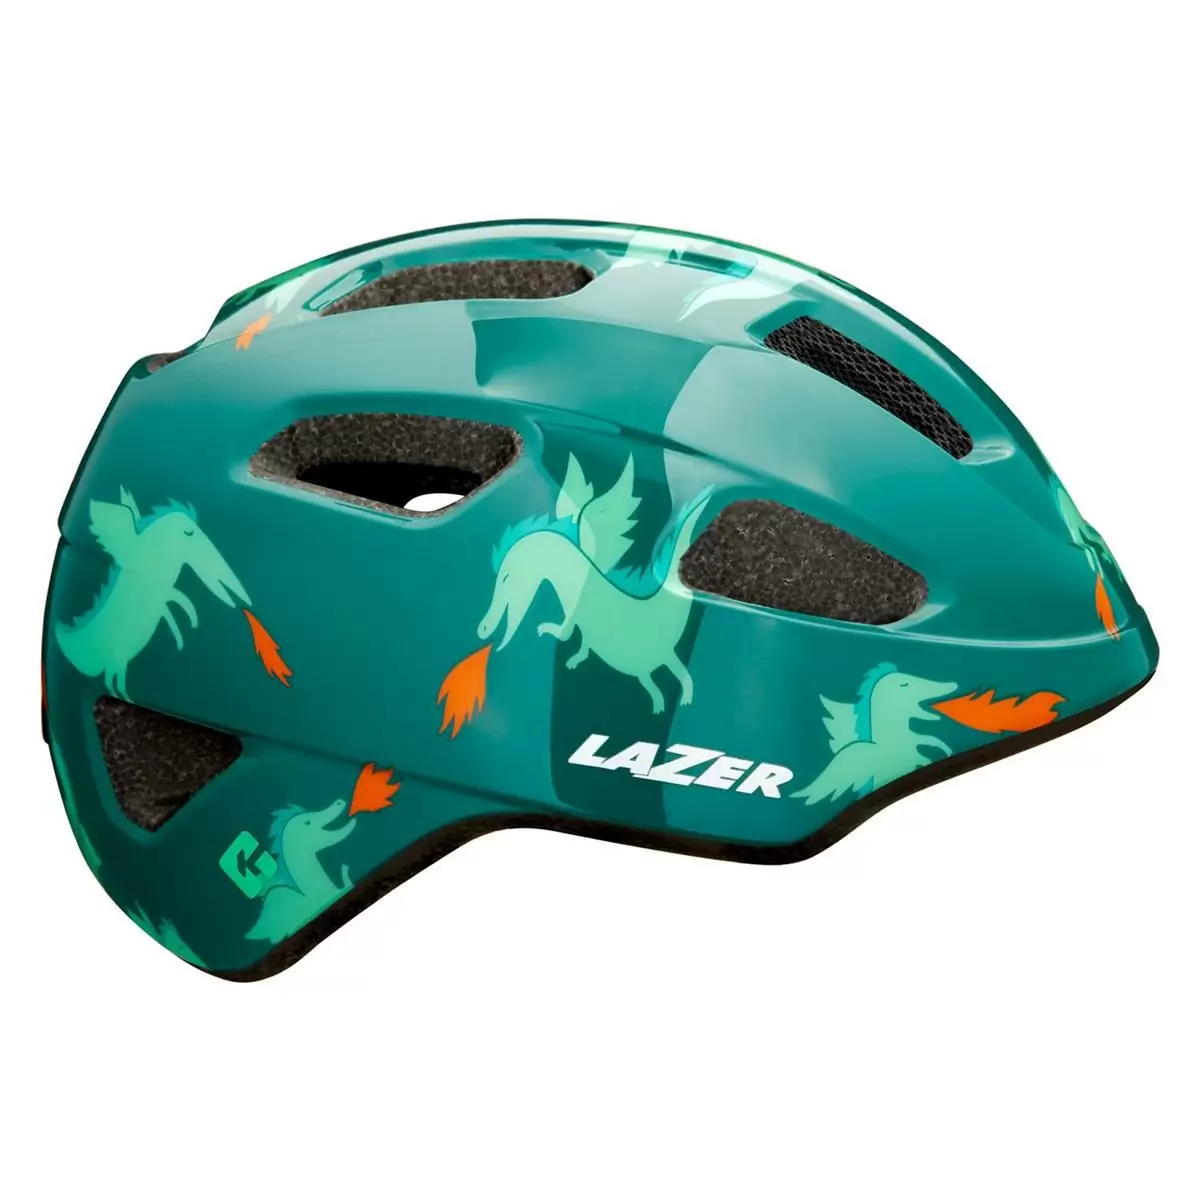 Nutz Kids Helmet KinetiCore CE Dragon Green One Size (50-56cm) - image